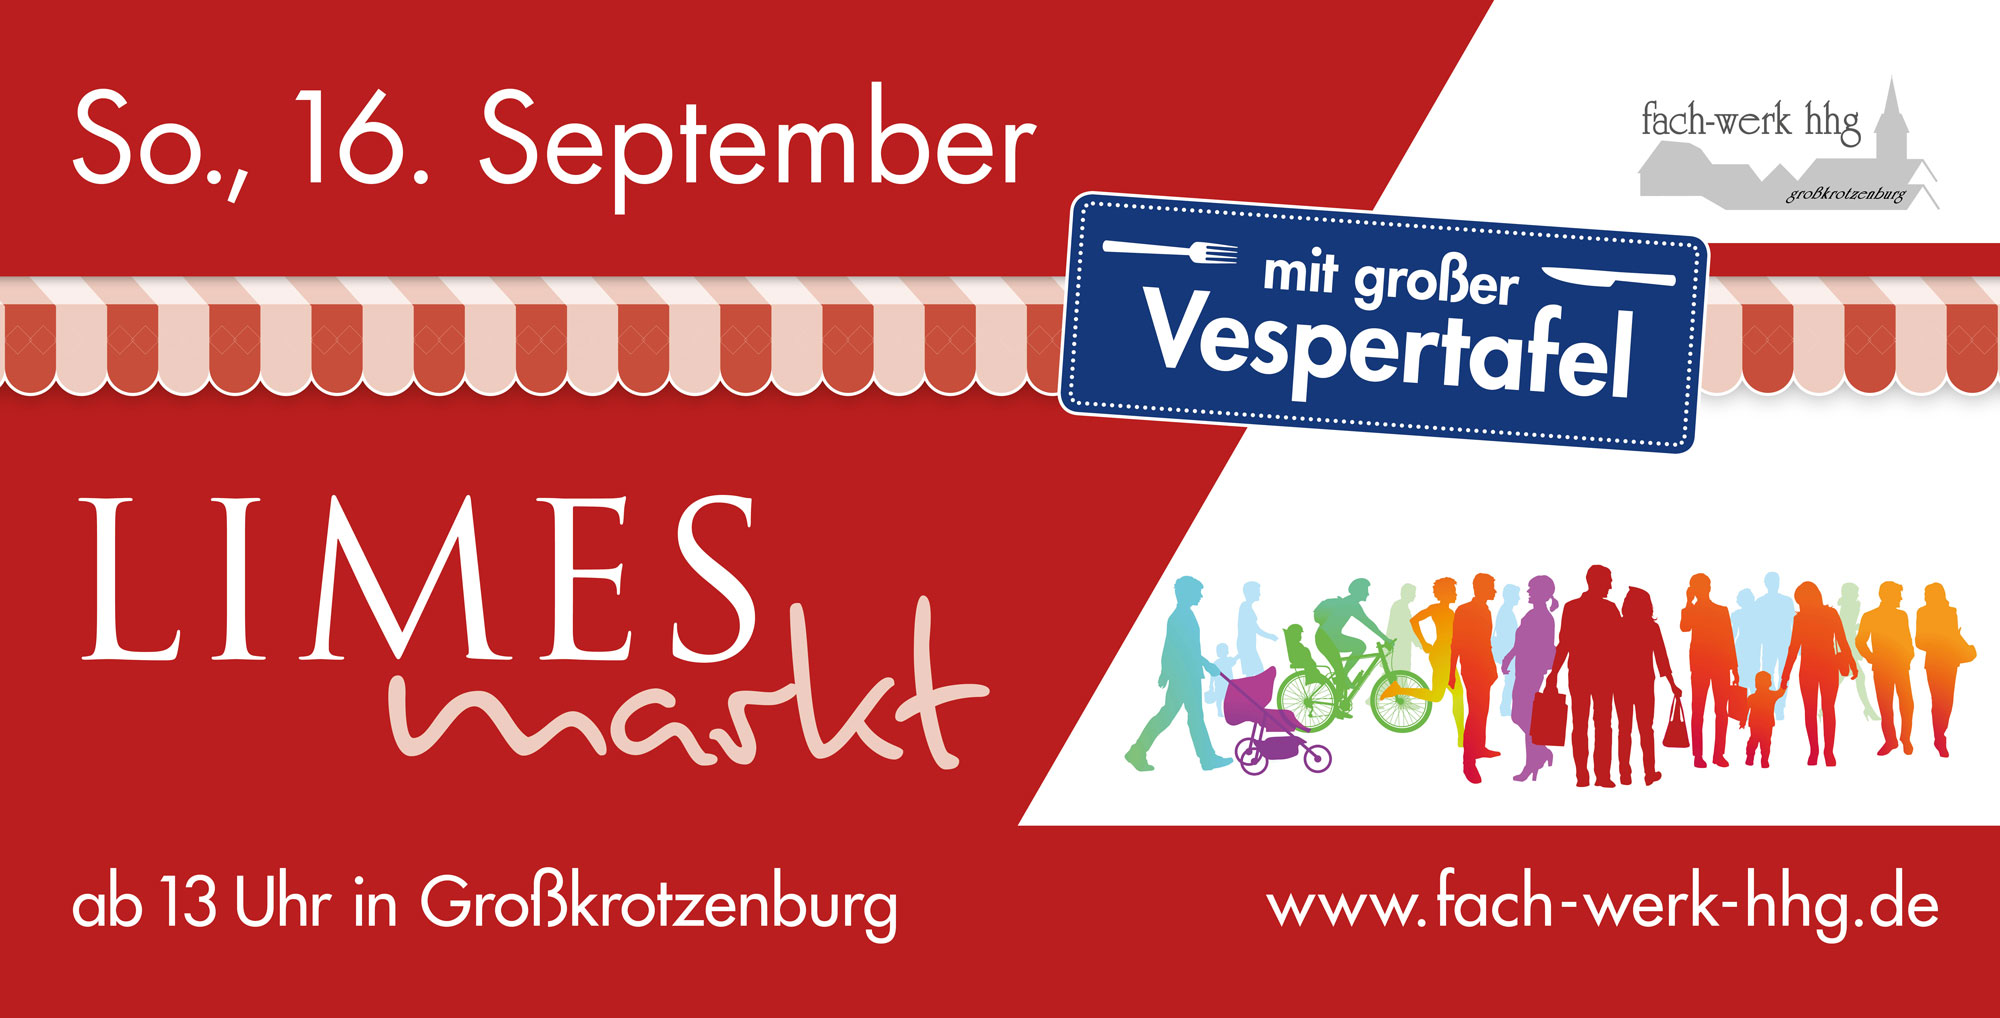 Nachkerb-Shoppen am Sonntag, 18. September 2016 in Großkrotzenburg